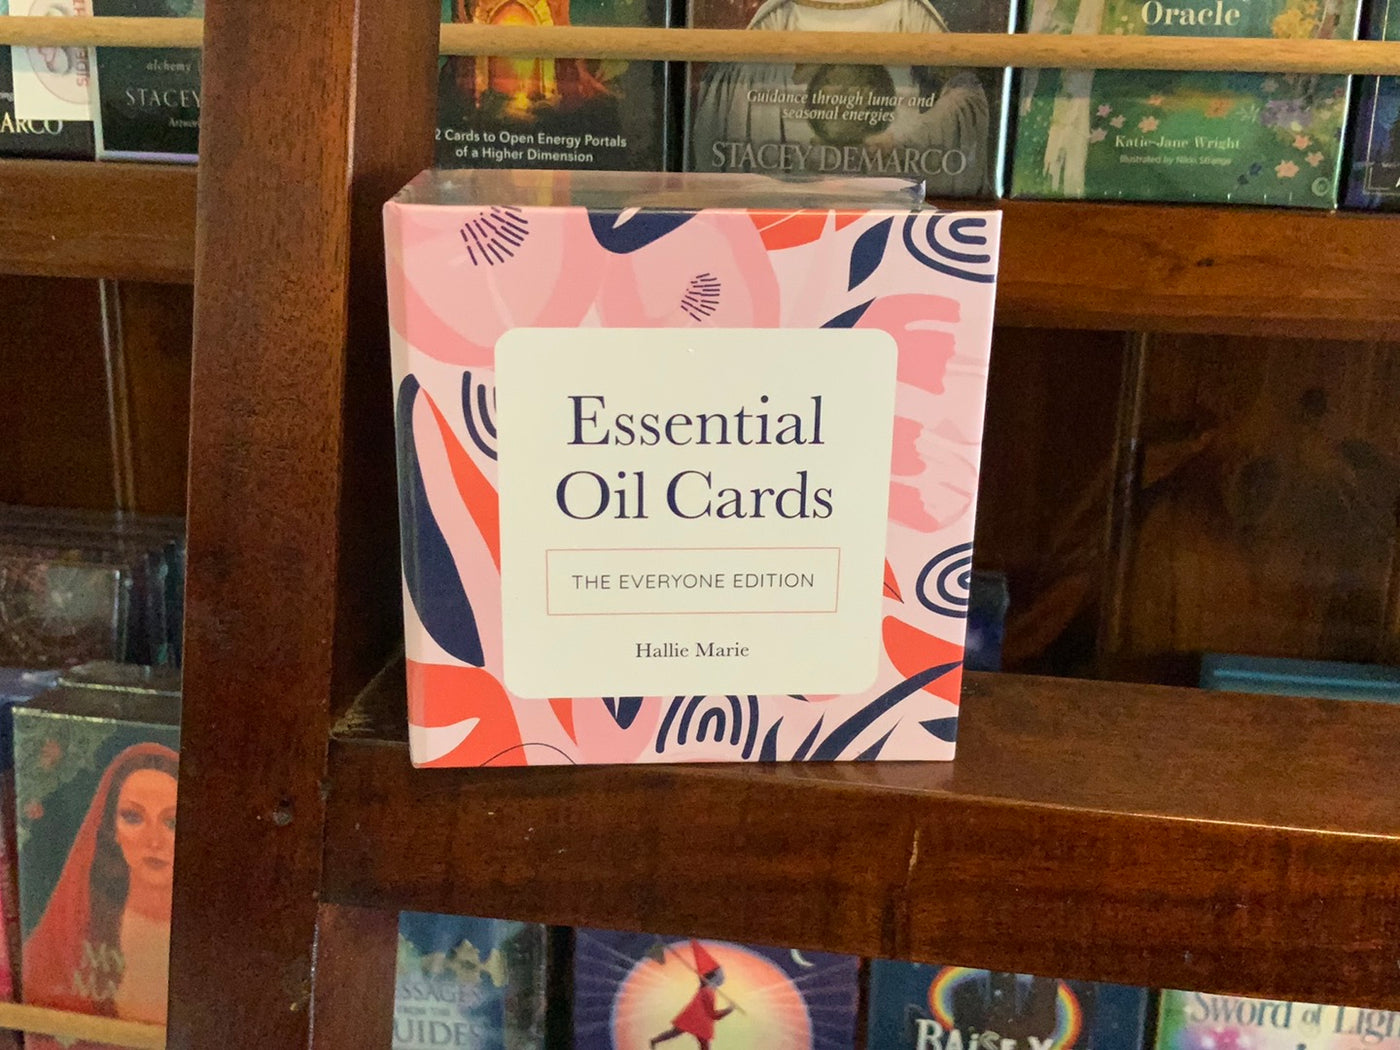 The Essential Oils Cards